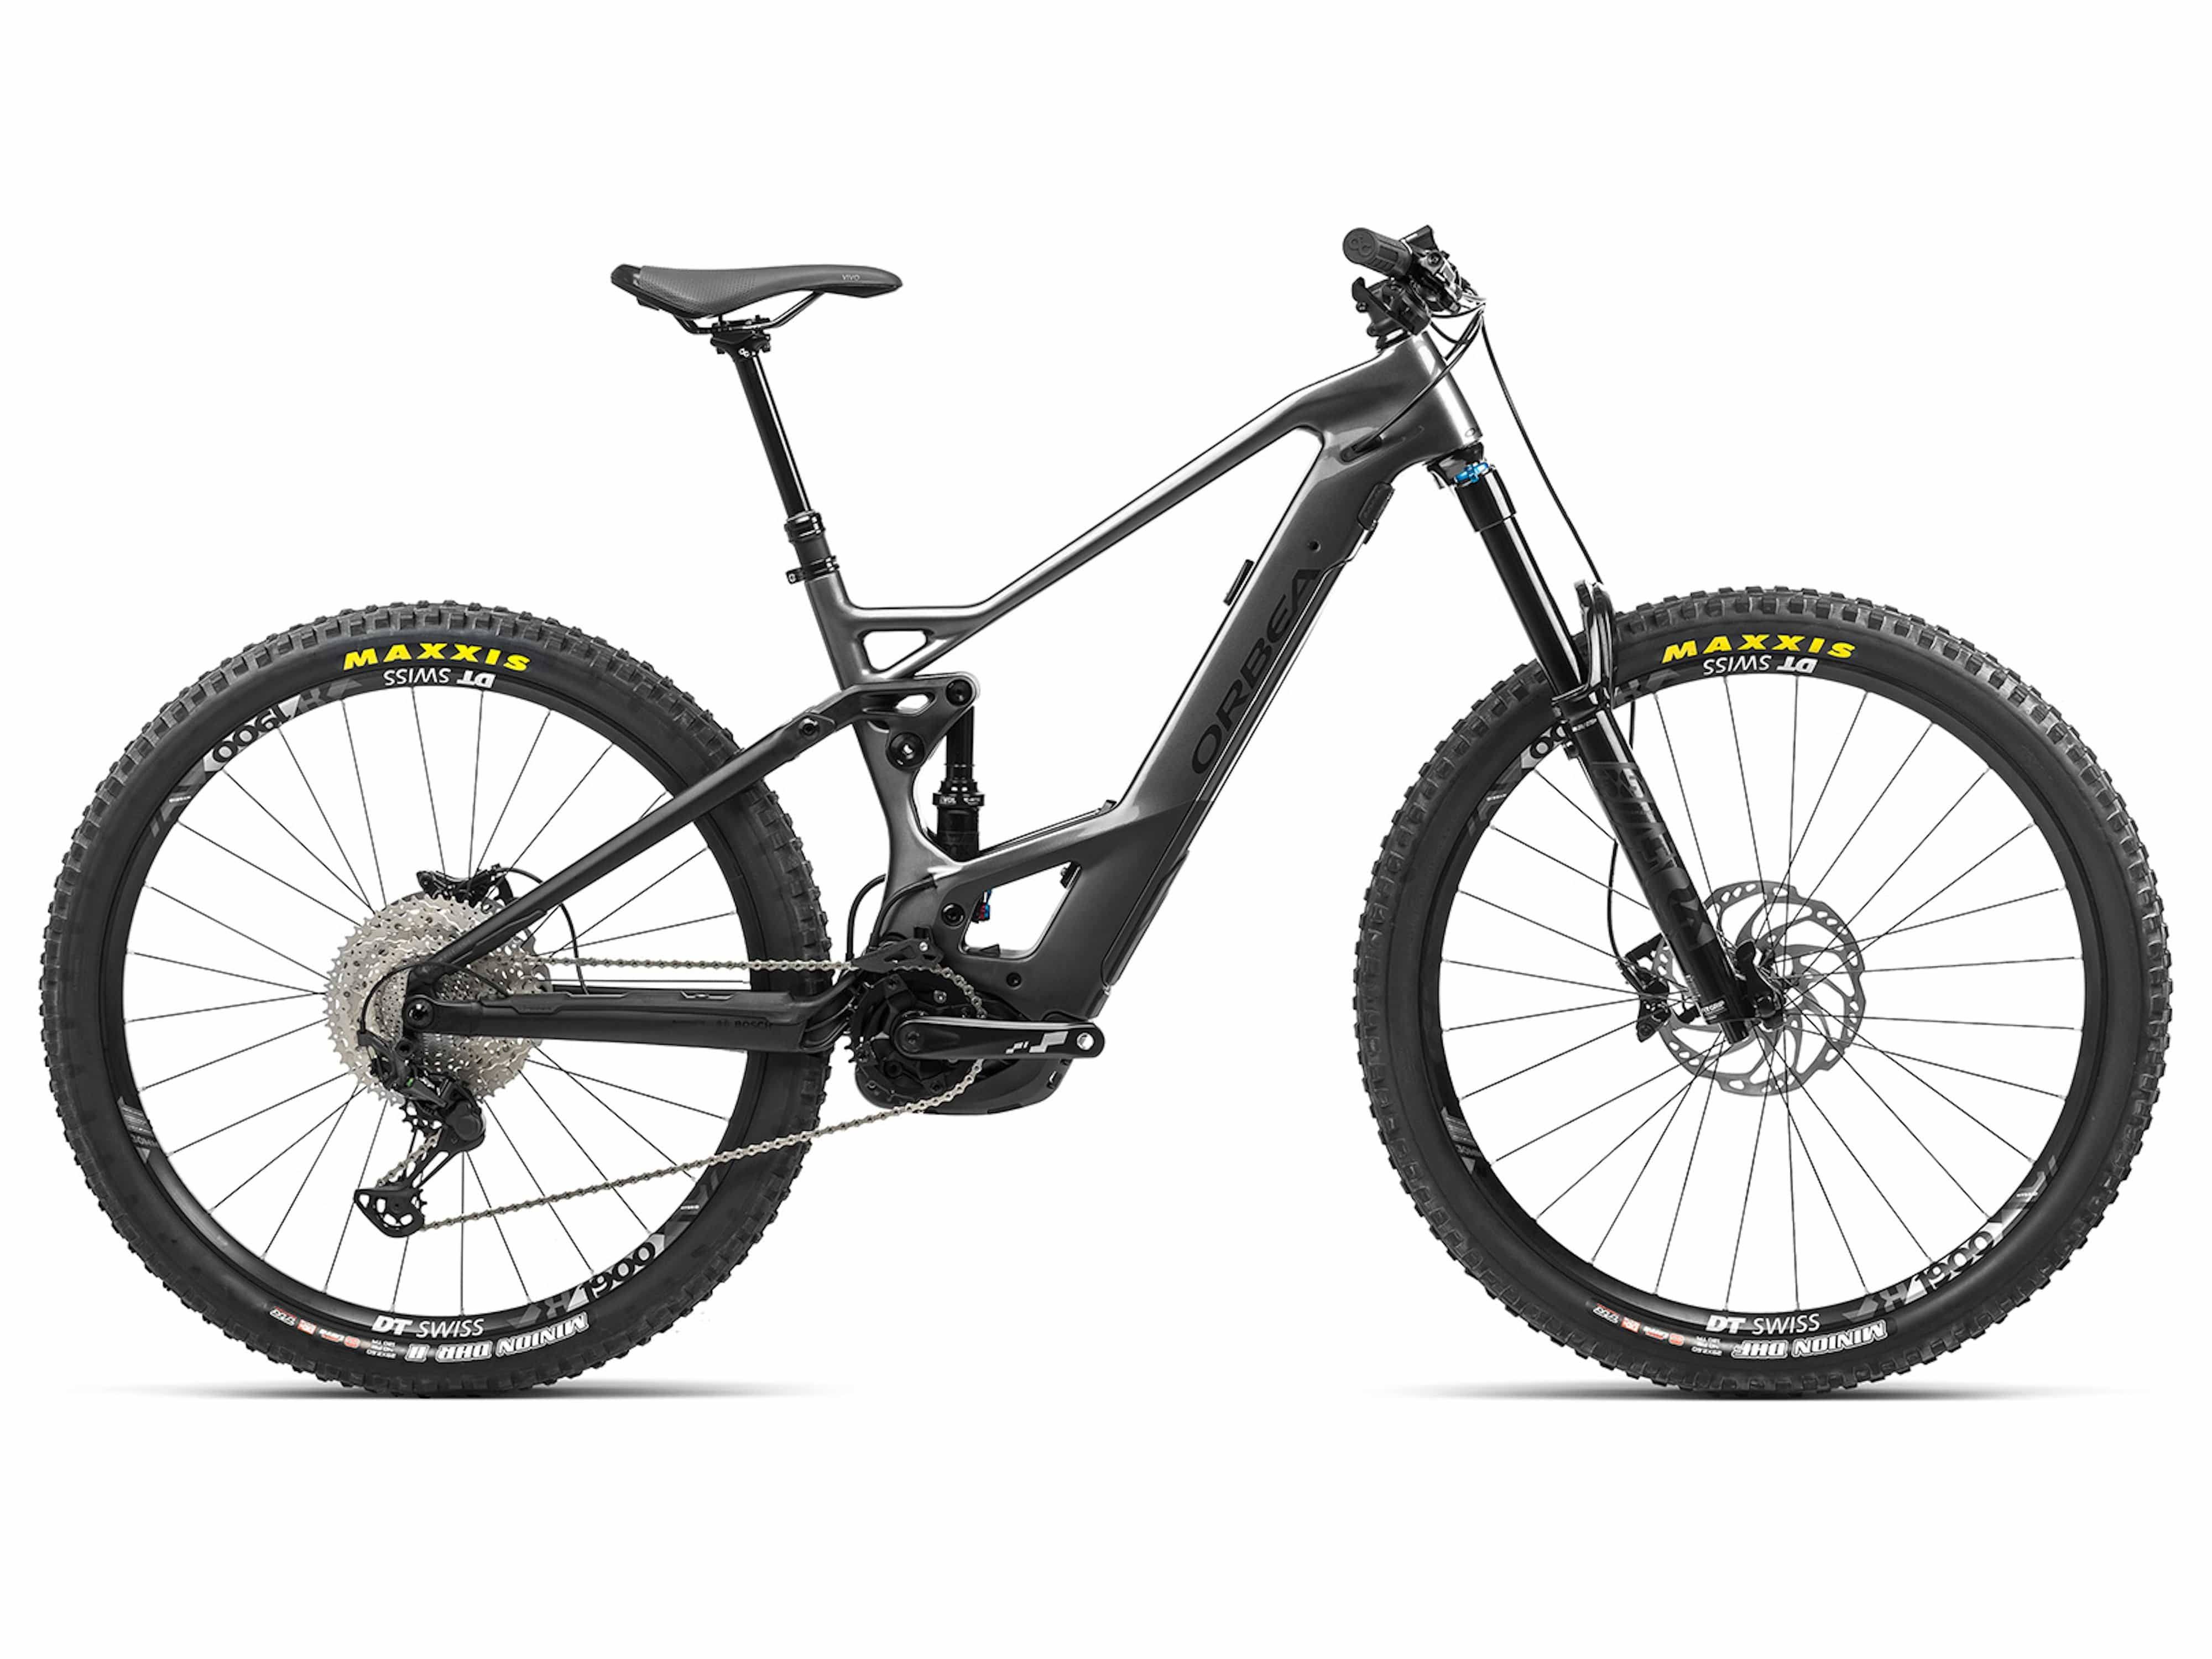 Orbea Wild FS M20 E-Bike 2021 Small/Medium, Anthracite Glitter/Black